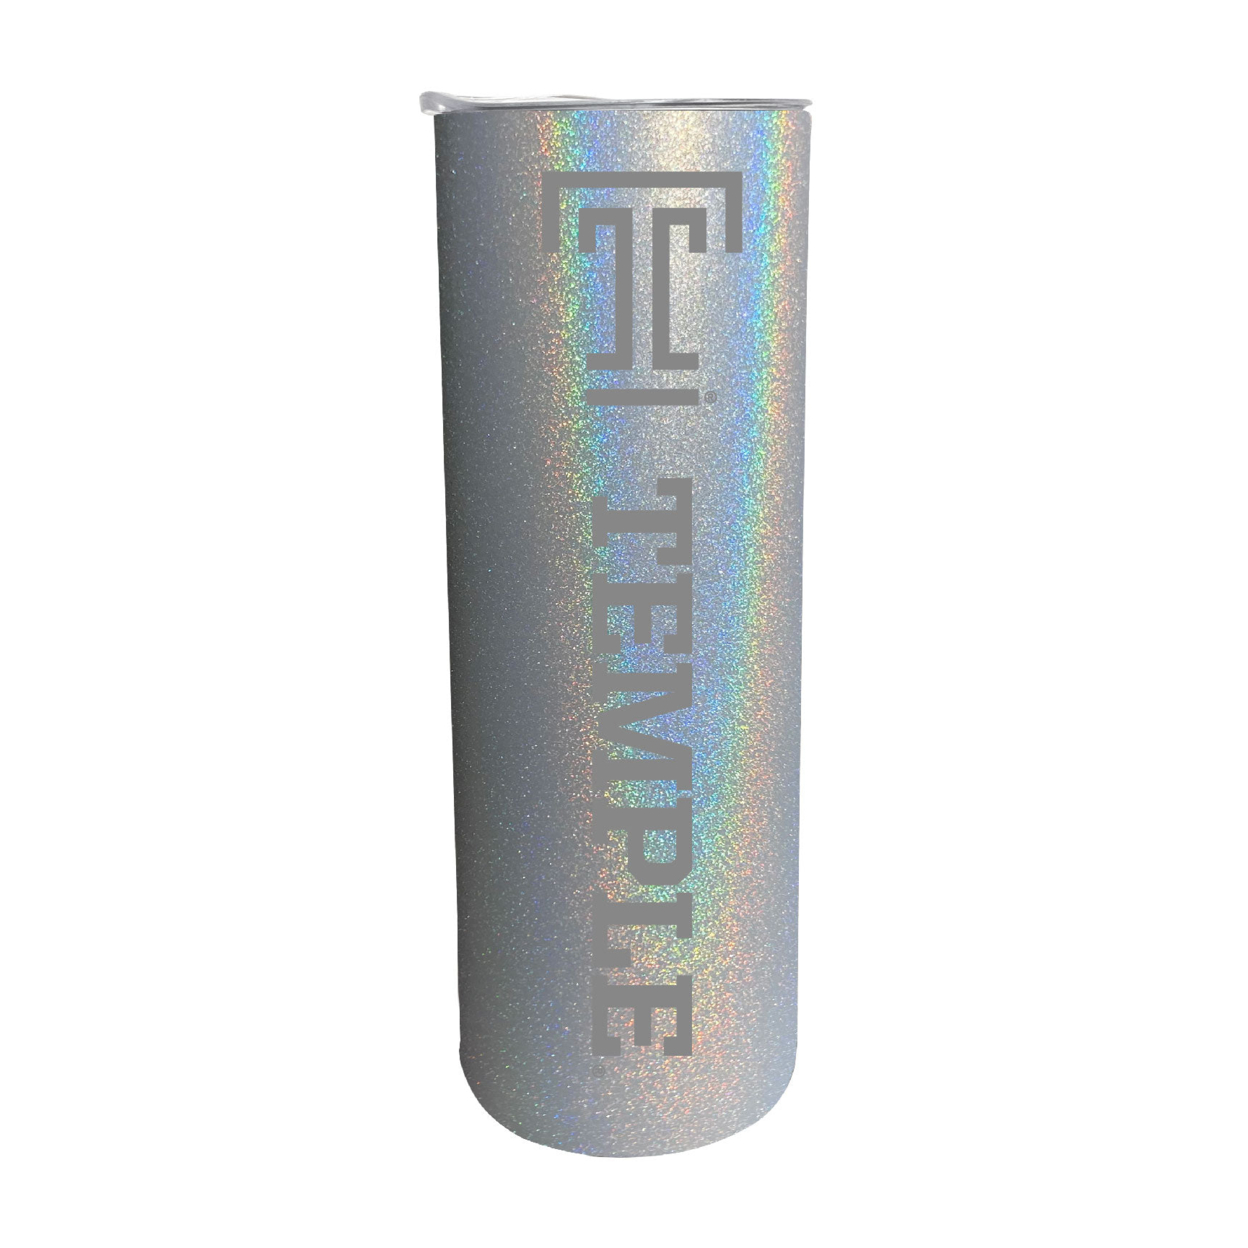 Temple University 20oz Insulated Stainless Steel Skinny Tumbler - Rainbow Glitter Grey